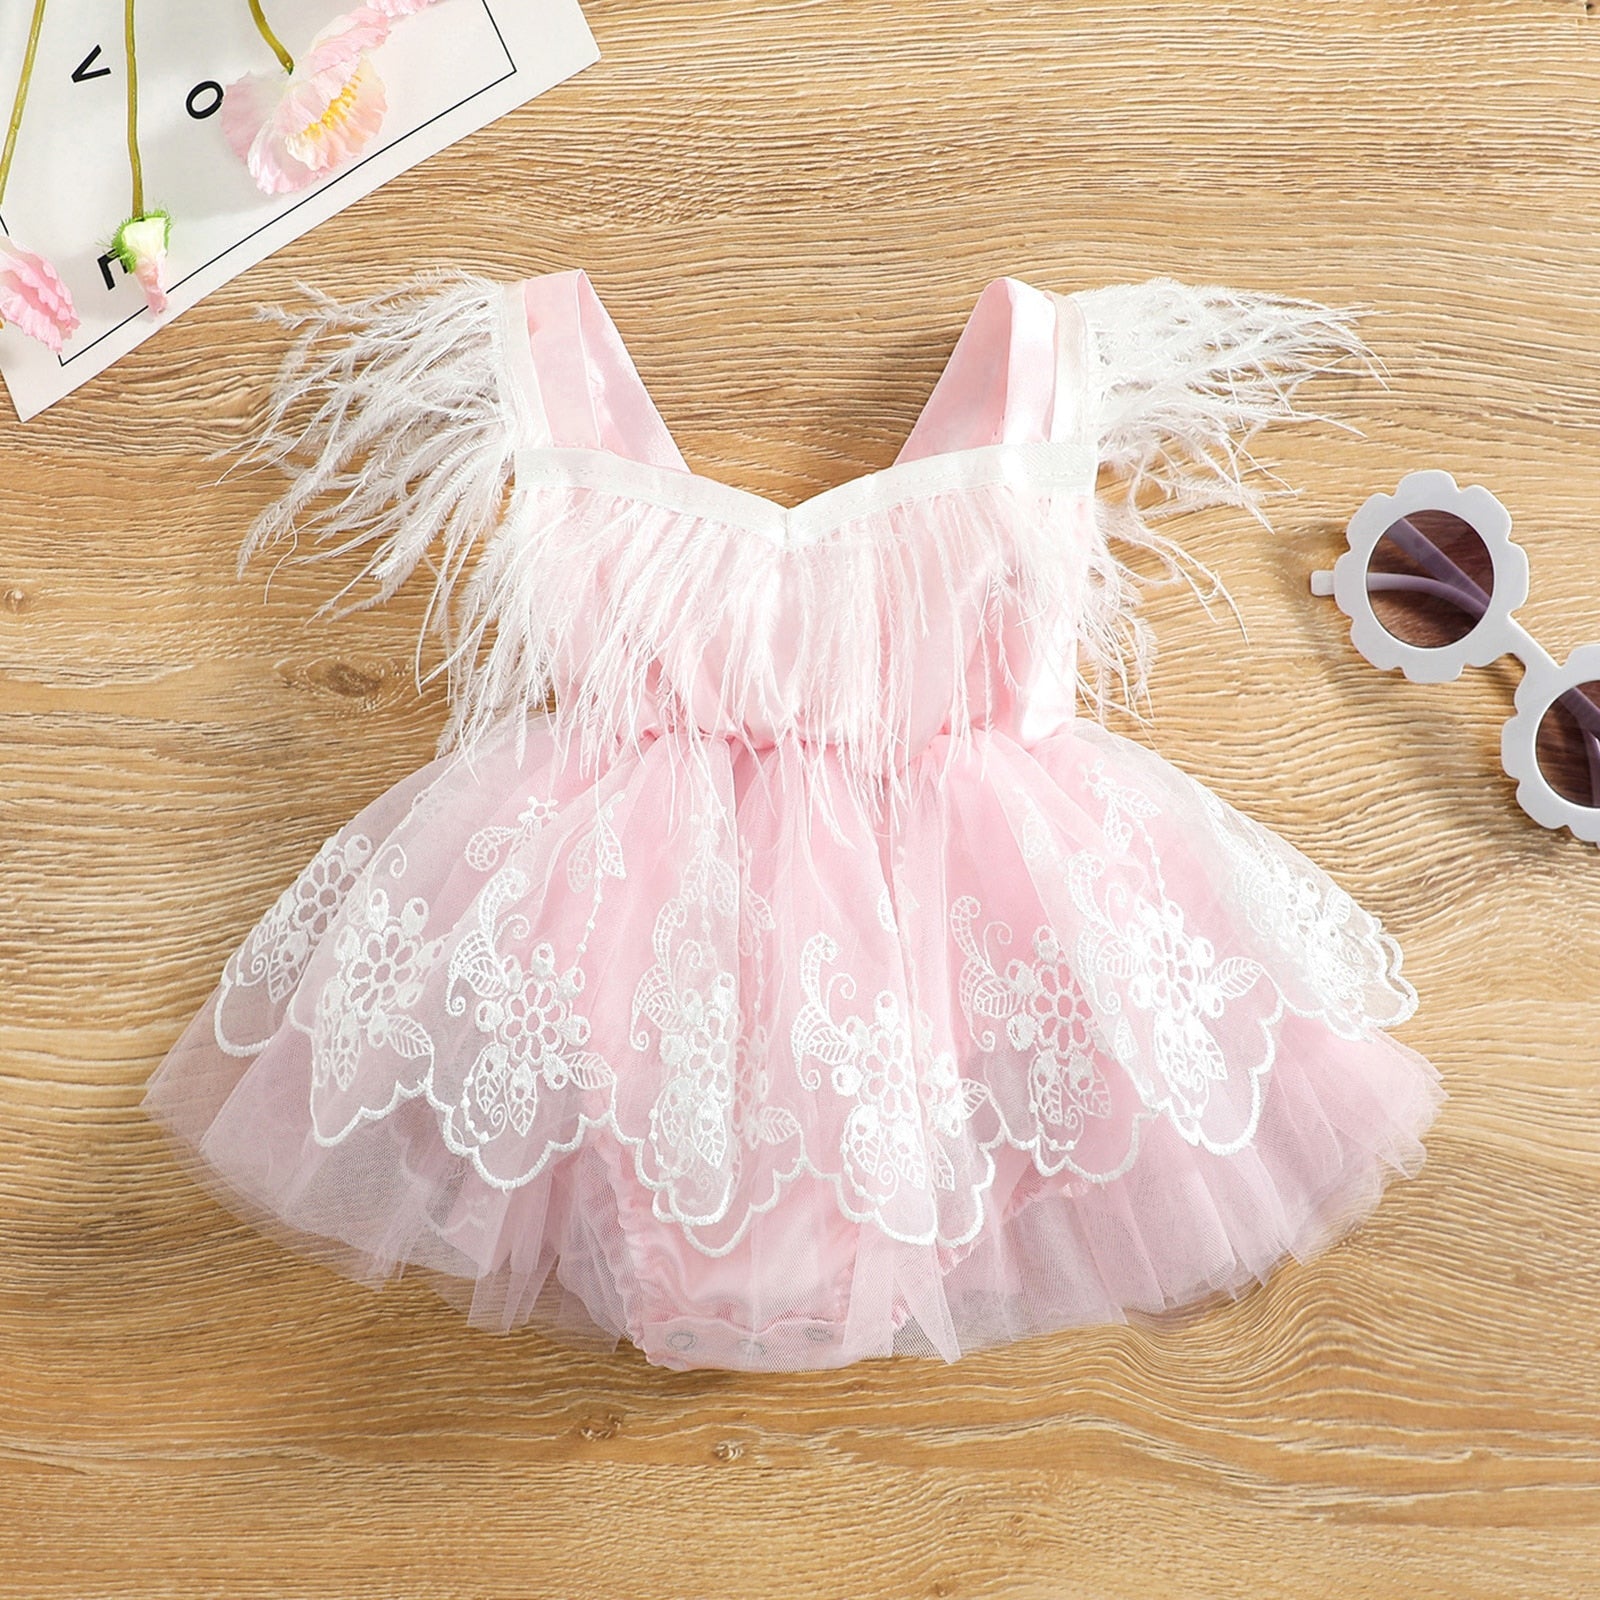 Vestido Body Infantil Bordado e Penas vestido Loja Click Certo Rosa 0-6 meses 35cm 